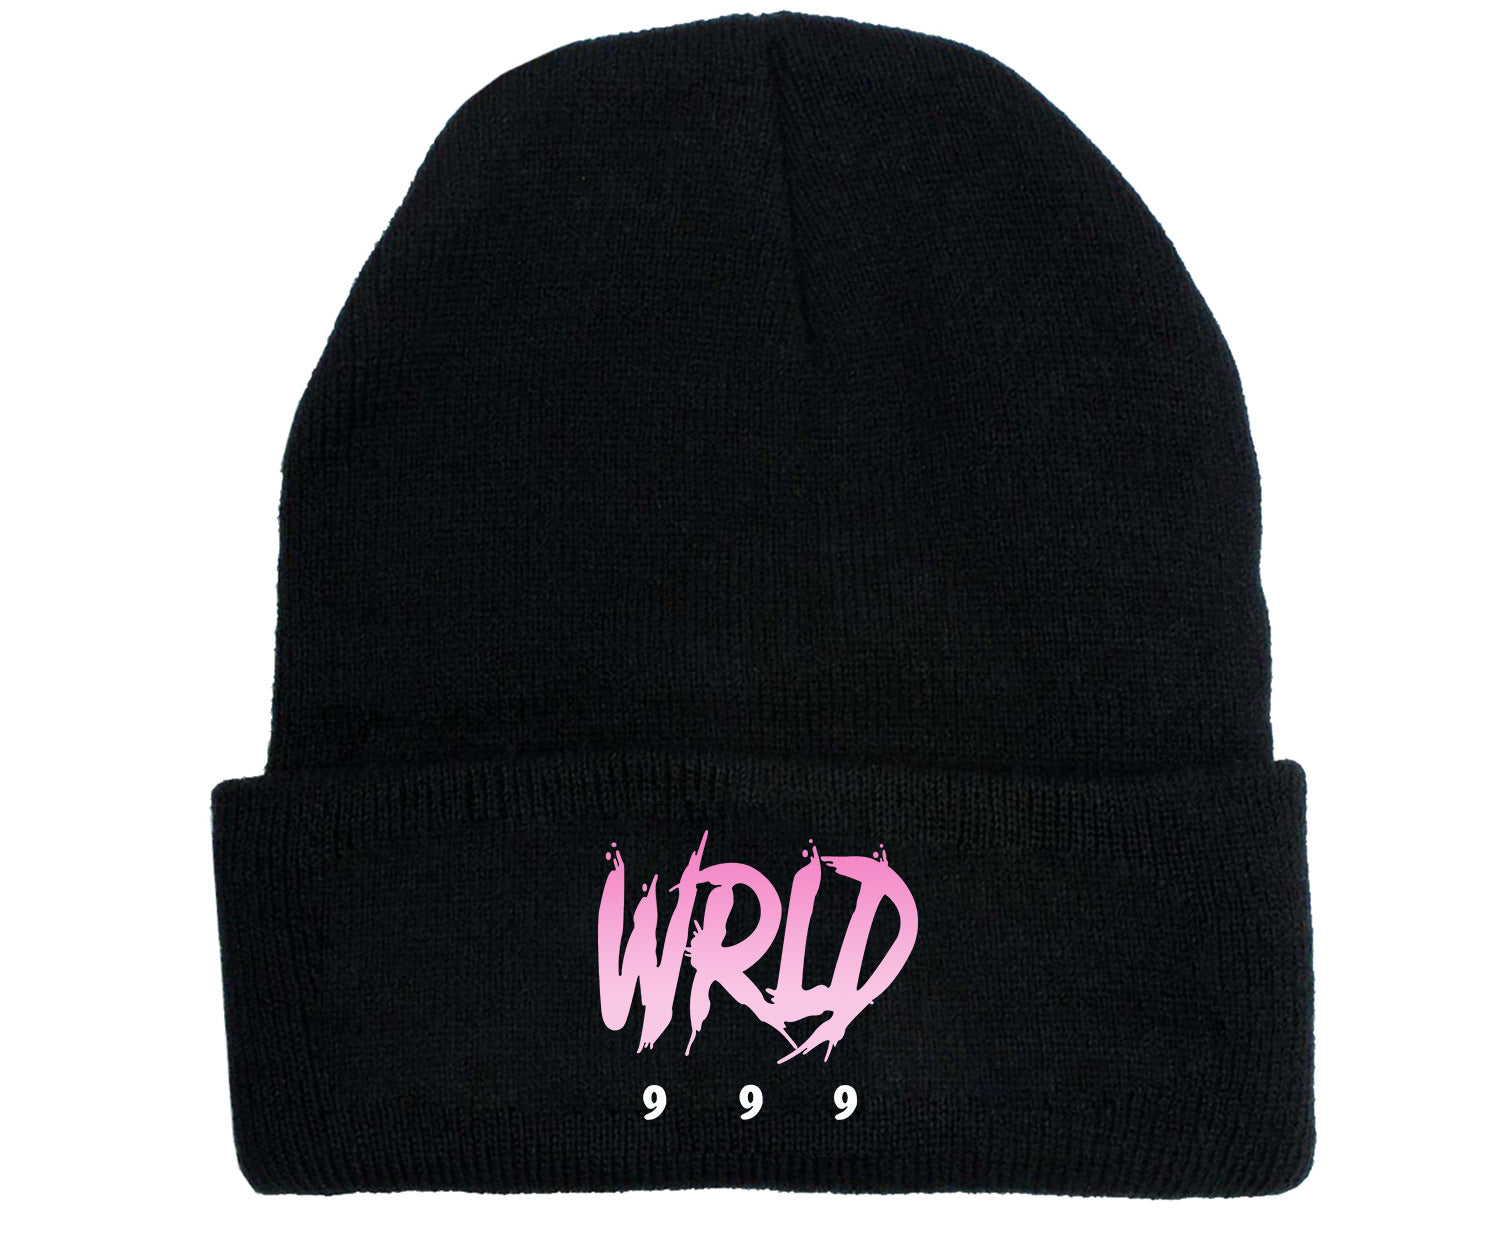 Juice Wrld 999 Fashion knitted hat